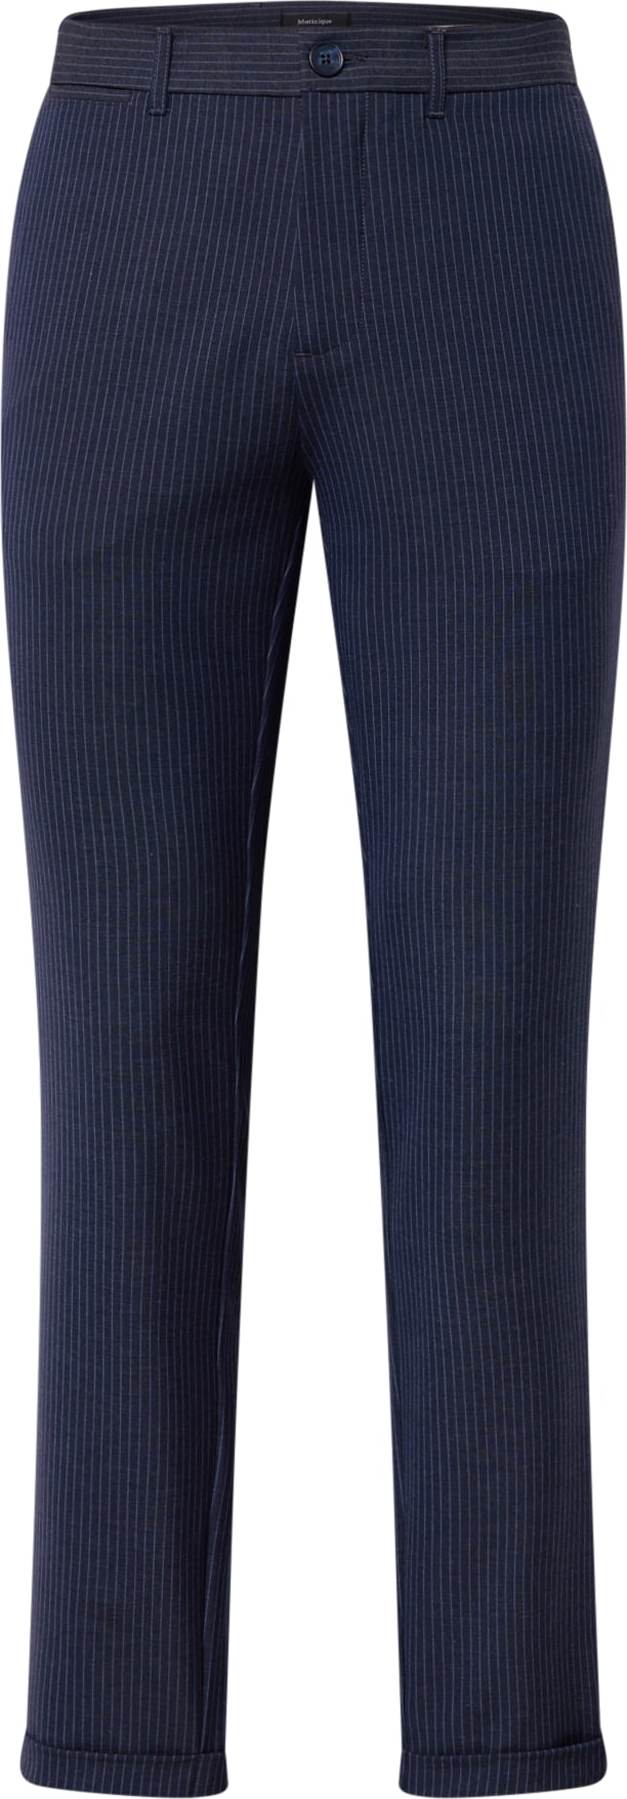 Chino kalhoty 'Liam' Matinique modrá / námořnická modř